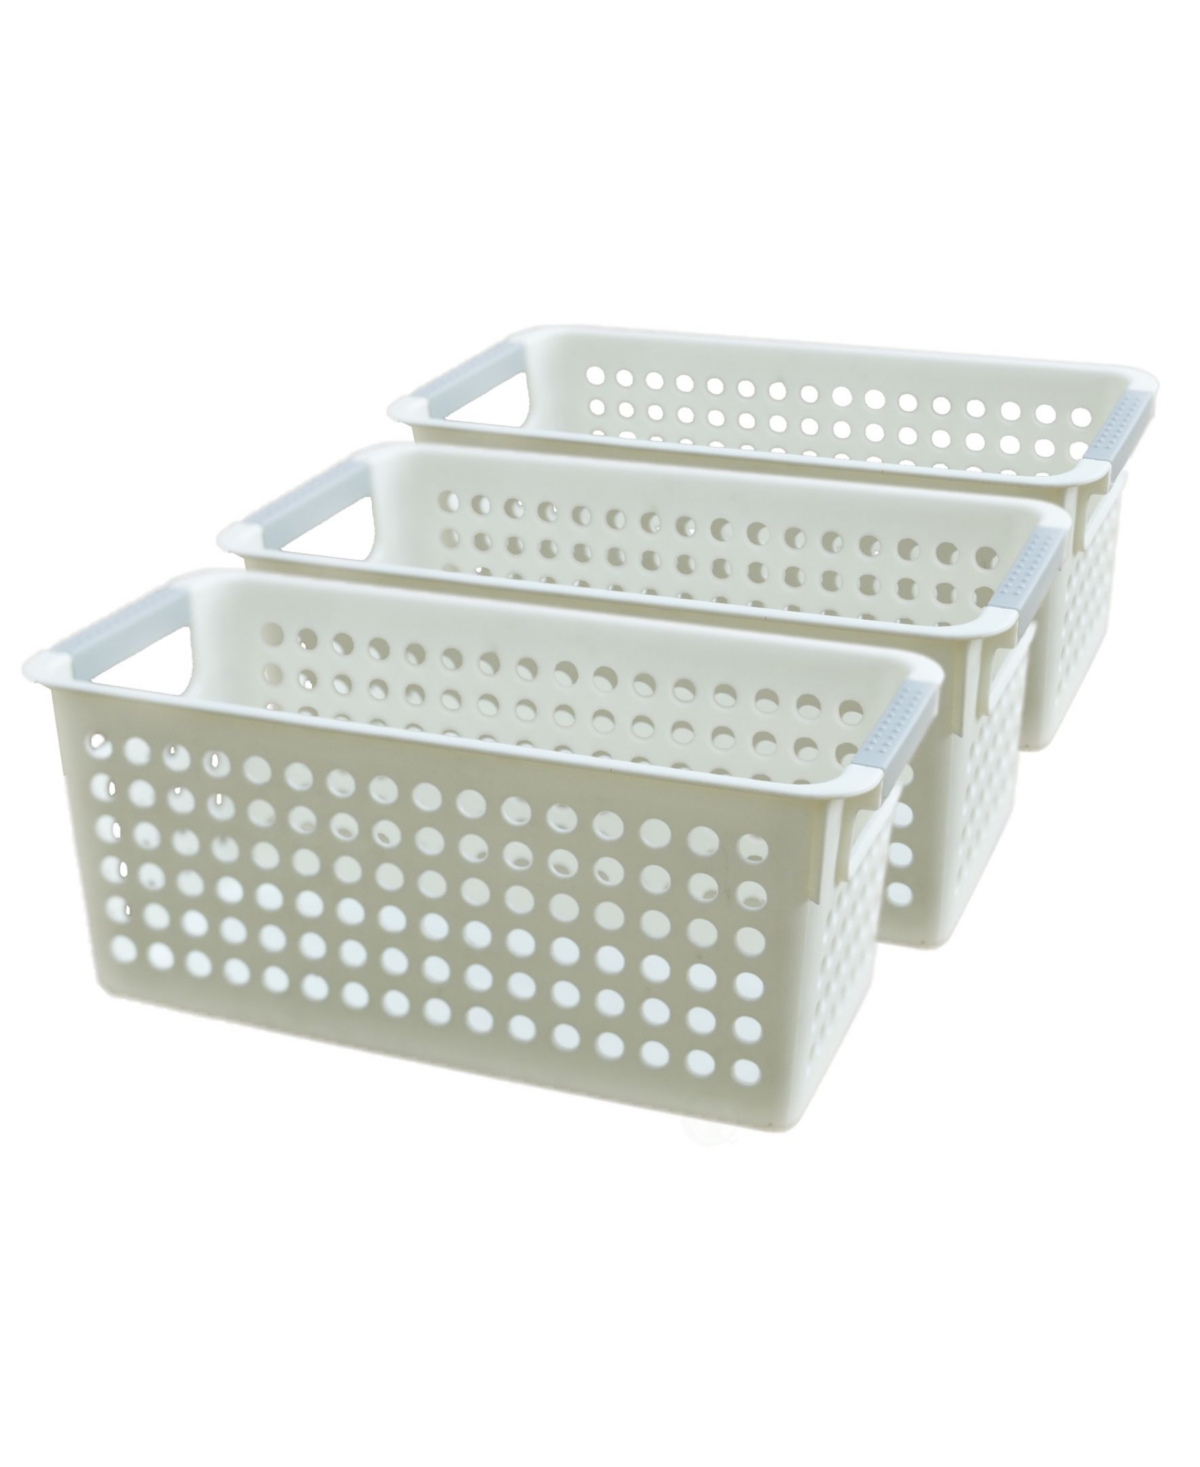 Vintiquewise Rectangular Plastic Shelf Organizer Basket with Handles, Set of 3 - White